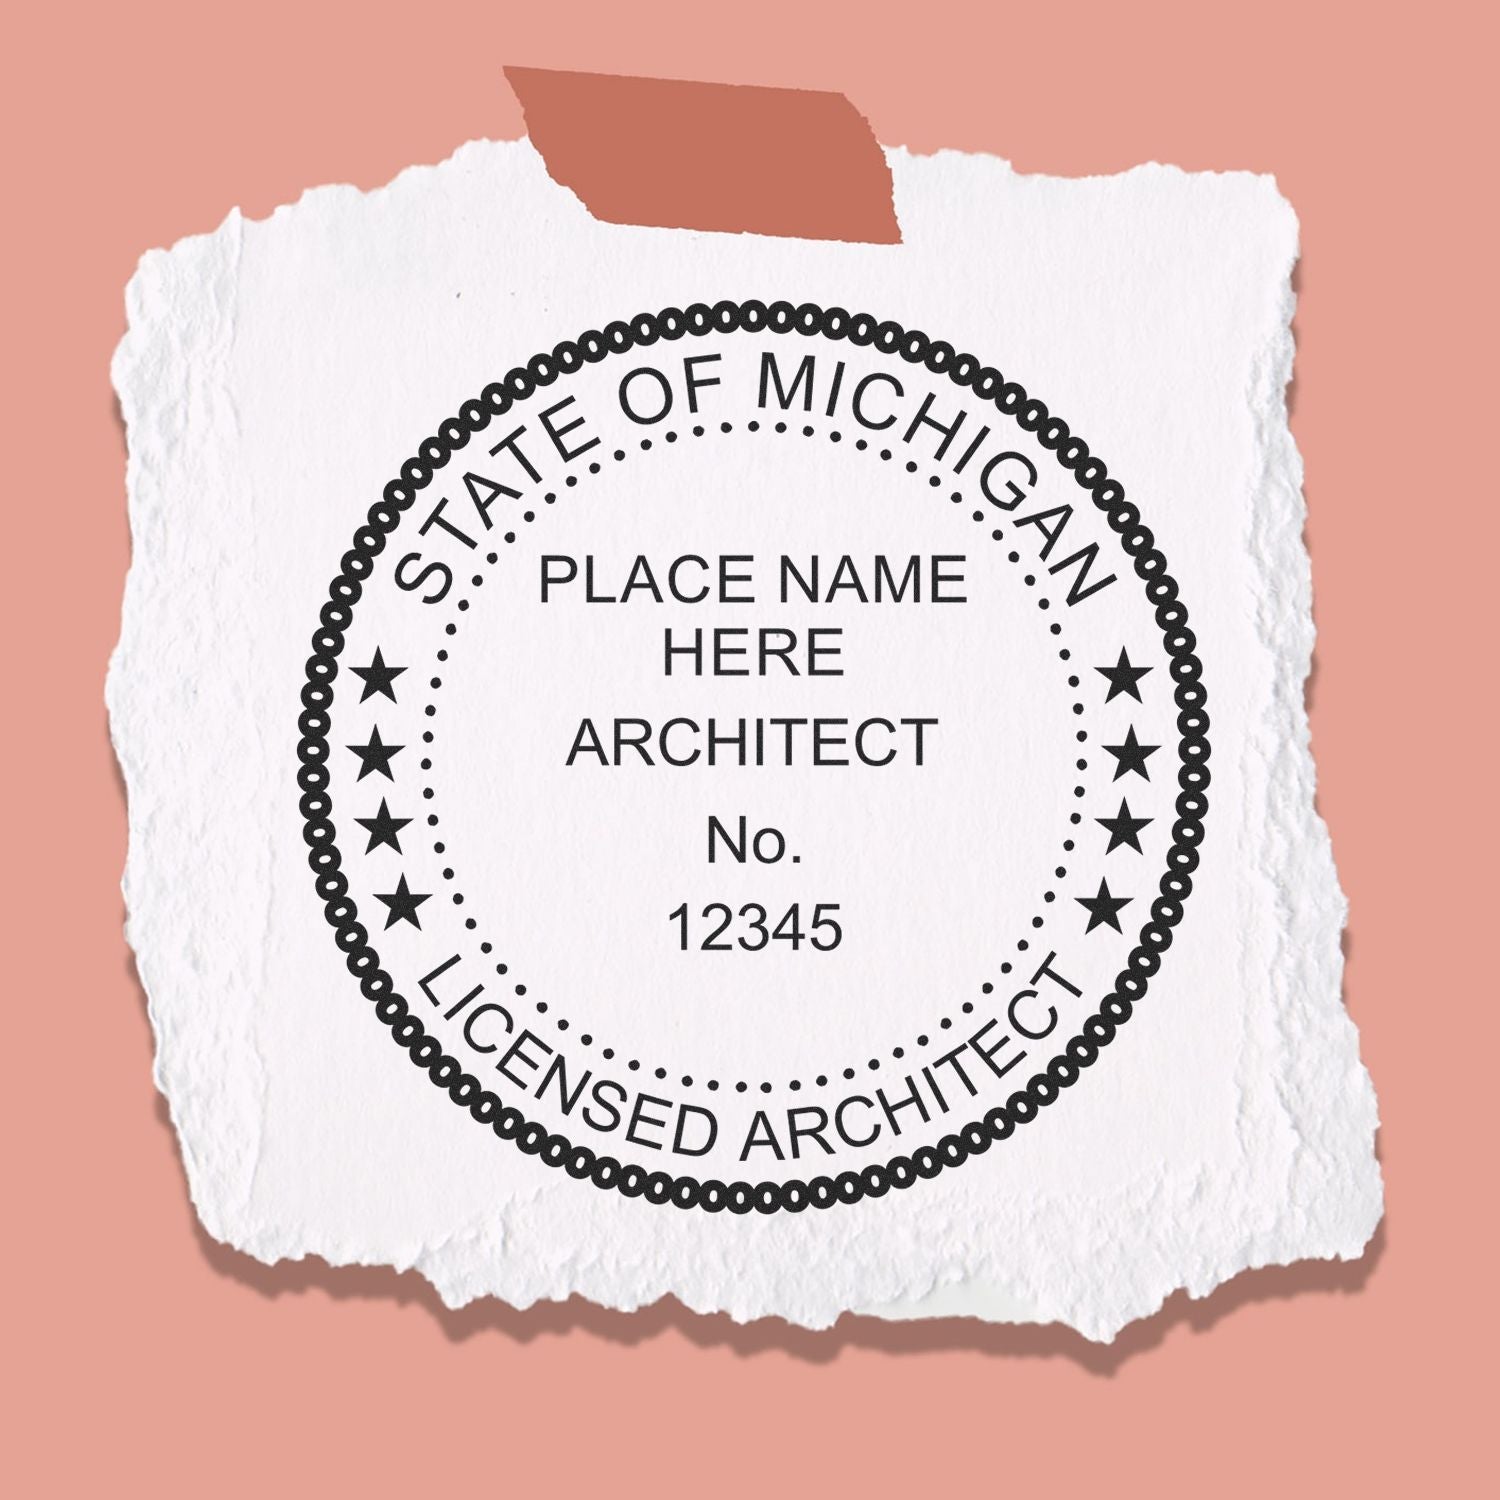 Premium MaxLight Pre-Inked Michigan Architectural Stamp Lifestyle Photo